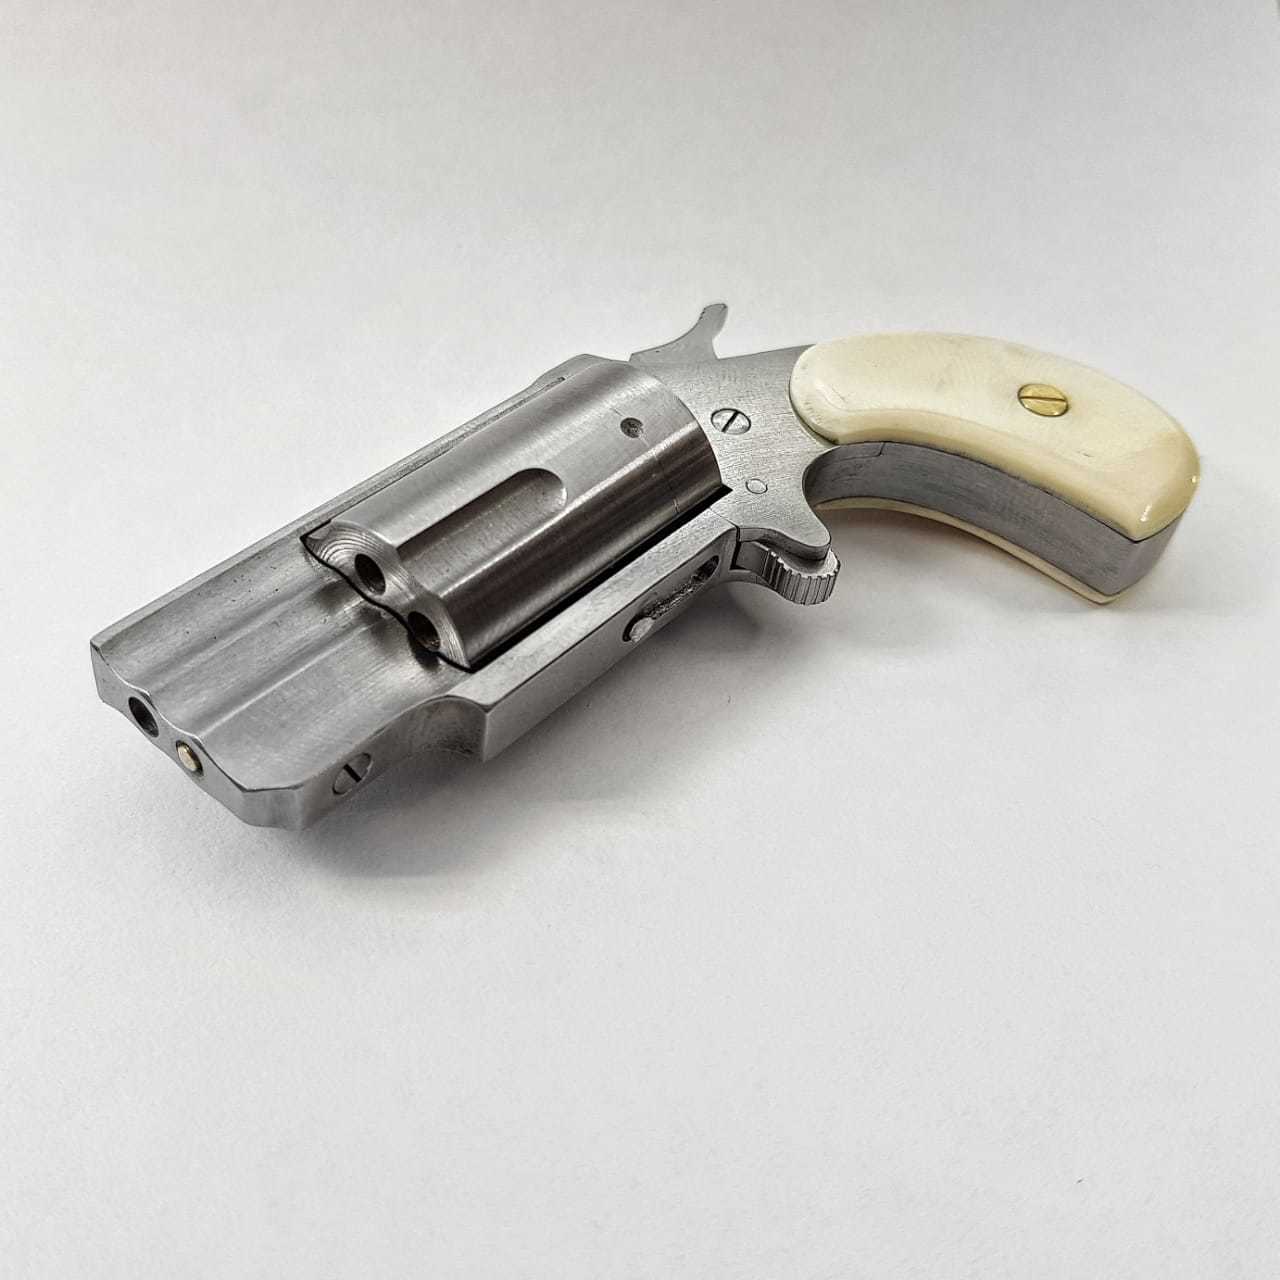 NAA PUG revolver ����������� 1